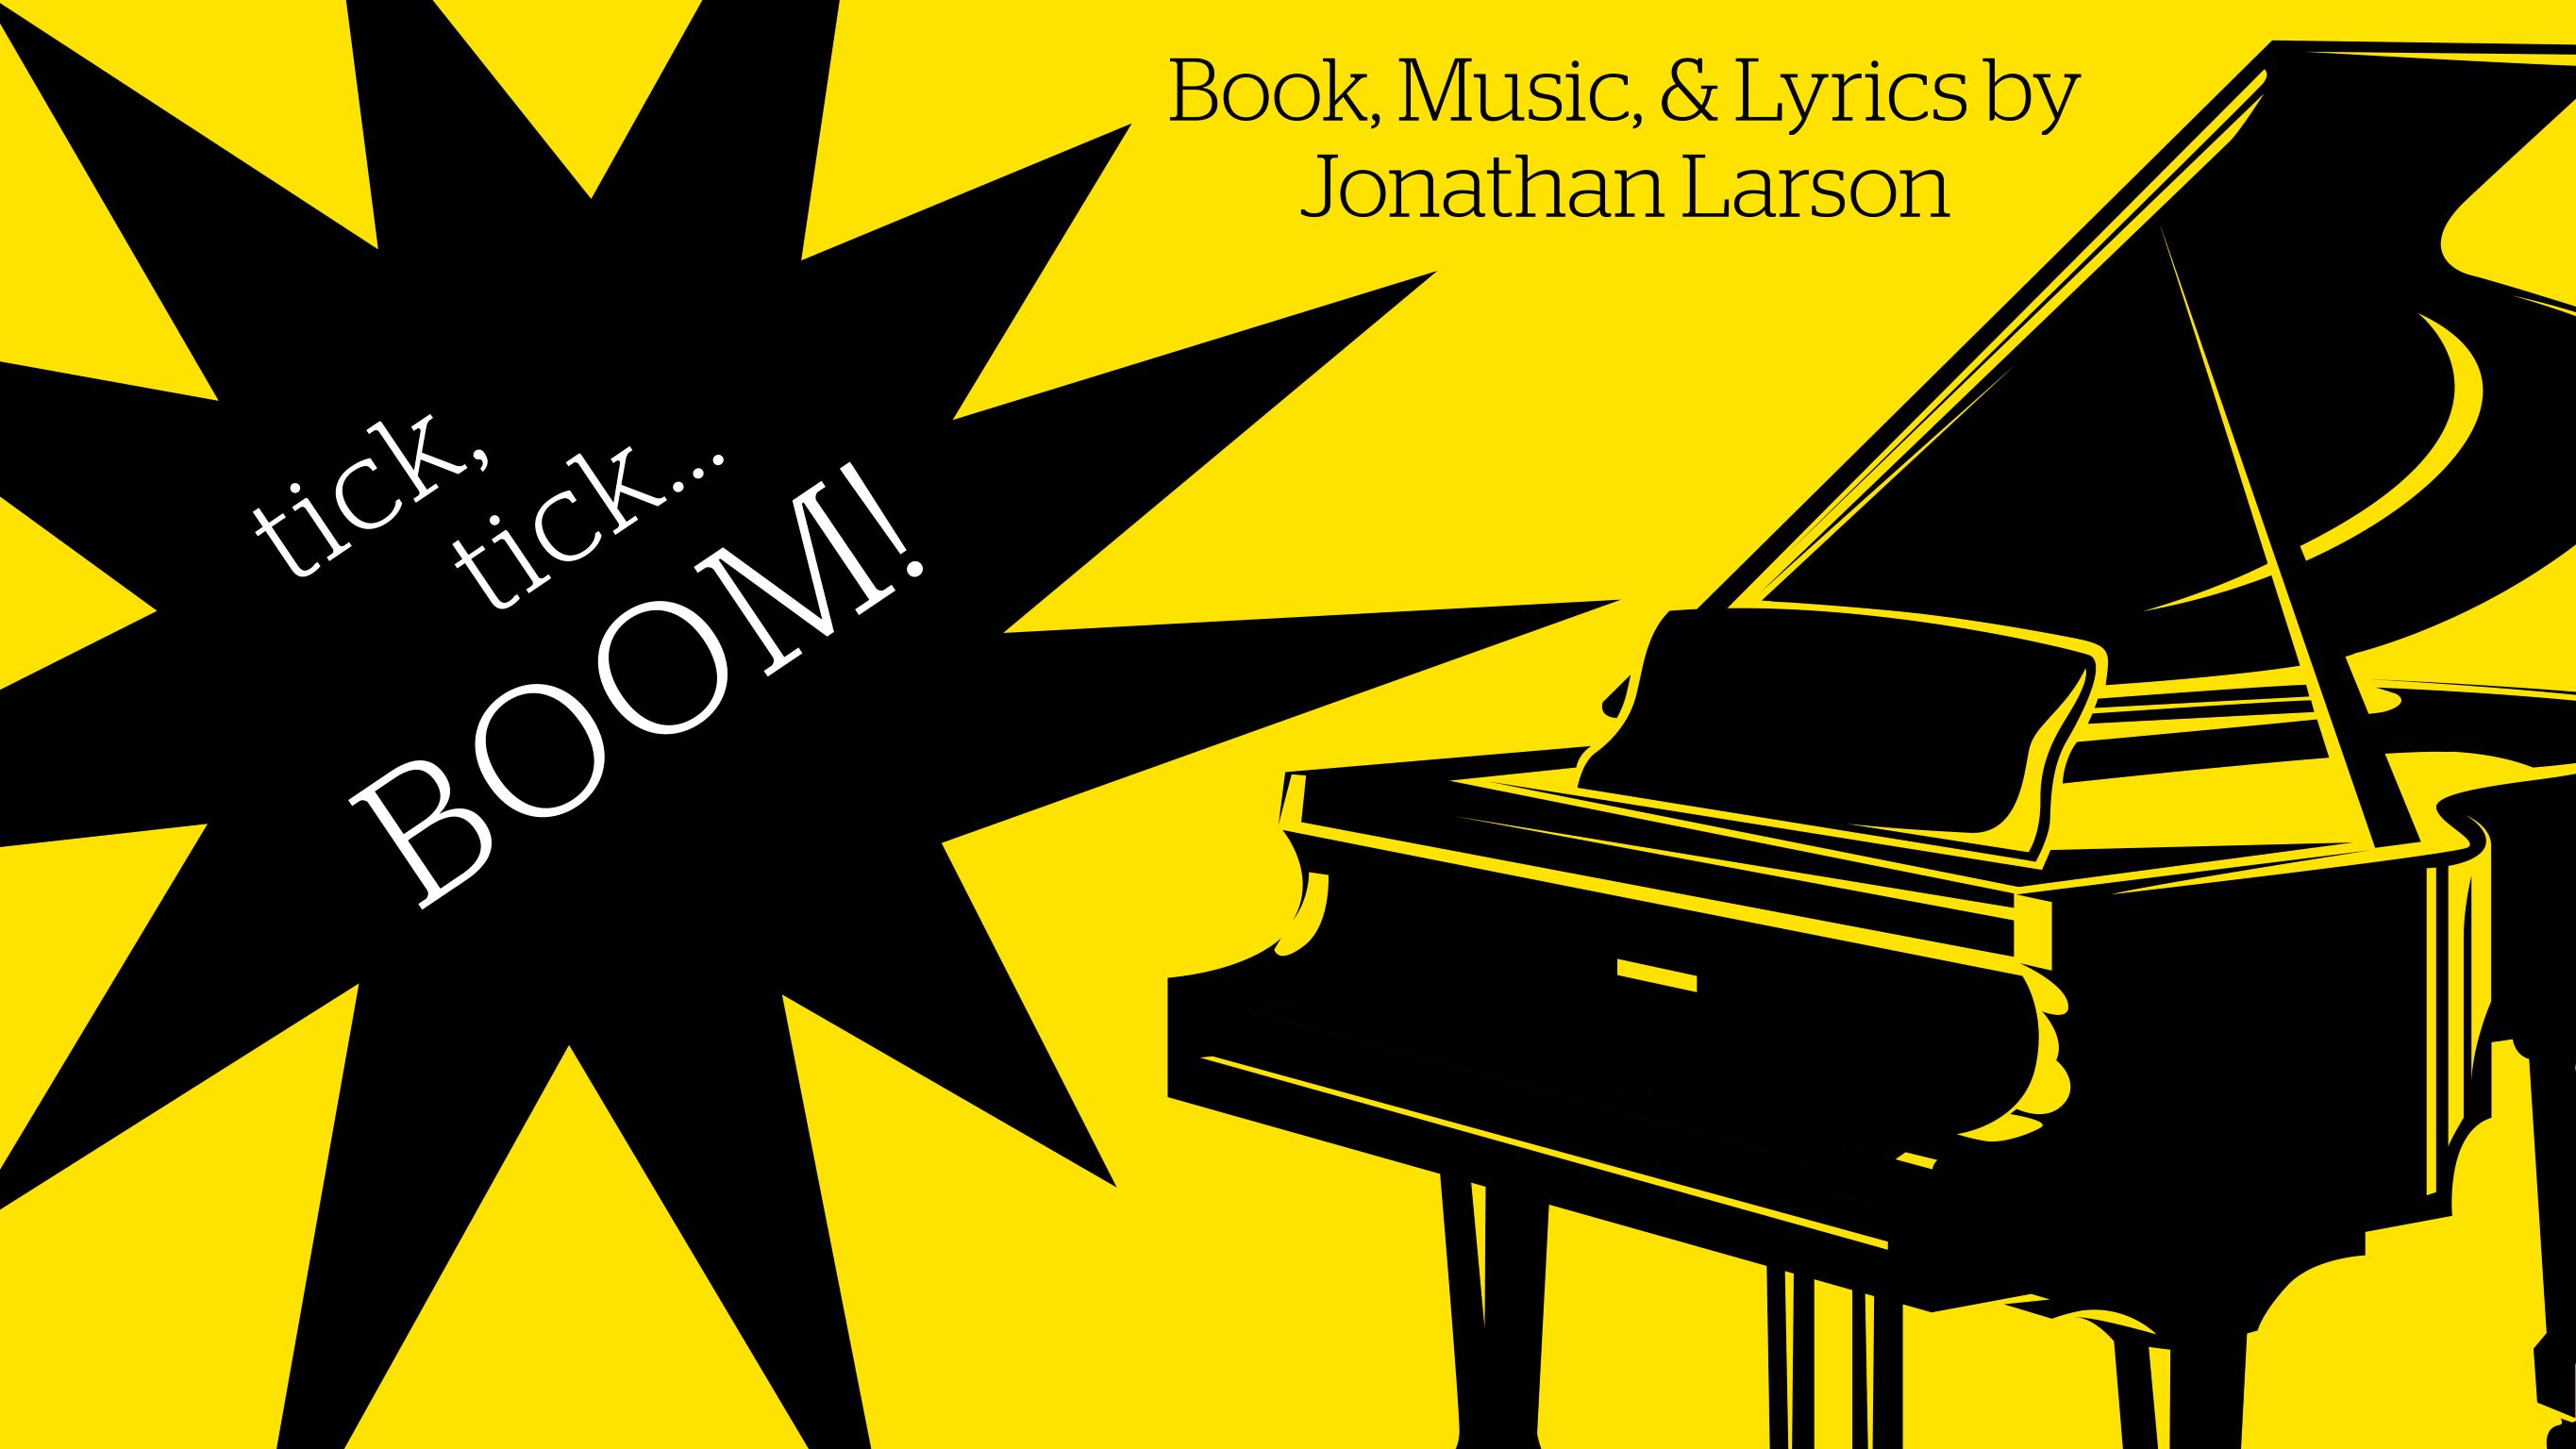 Tick, Tick... Boom! book, music, and lyrics by Jonathan Larson